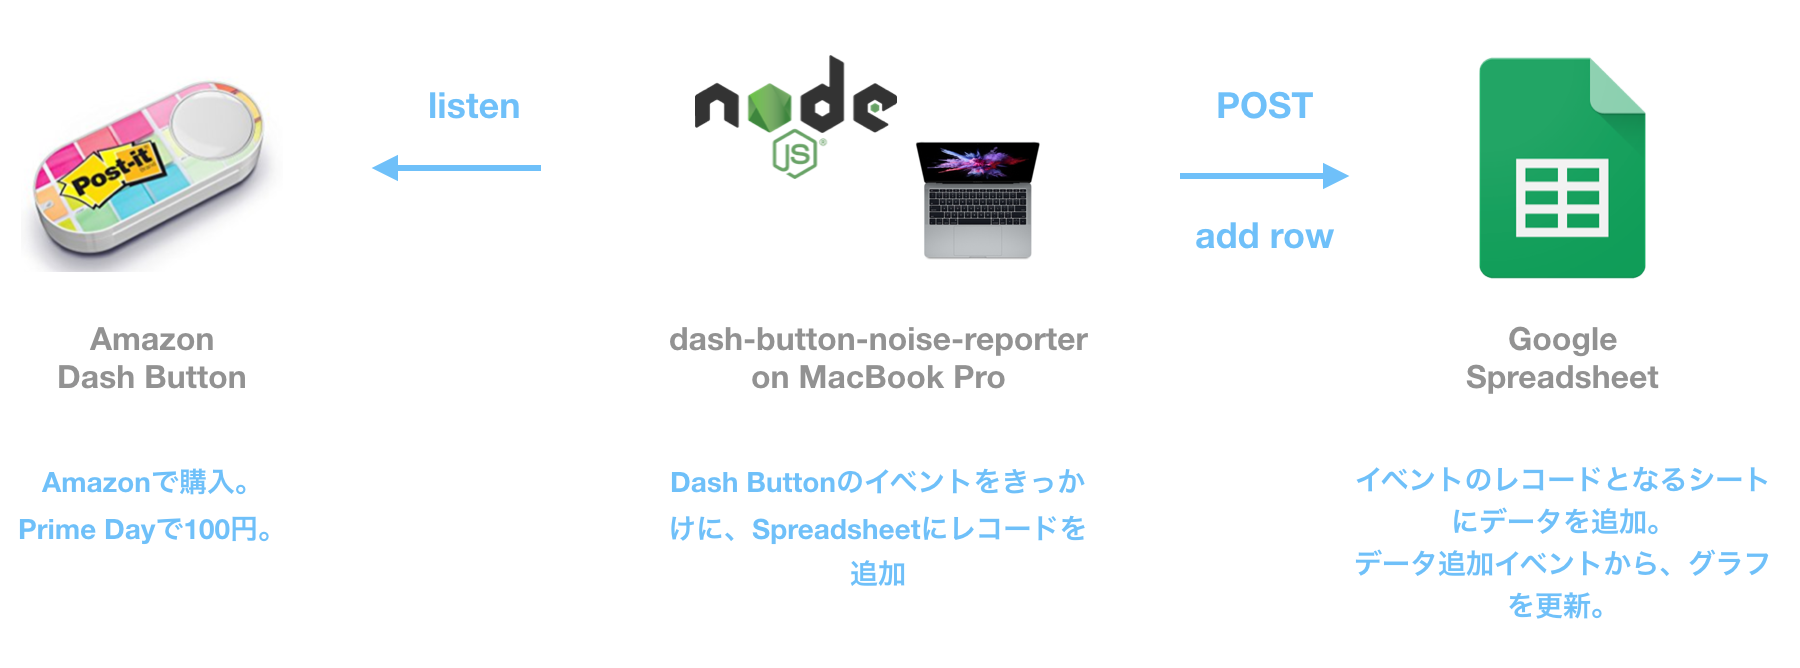 dash-button-architecture.png